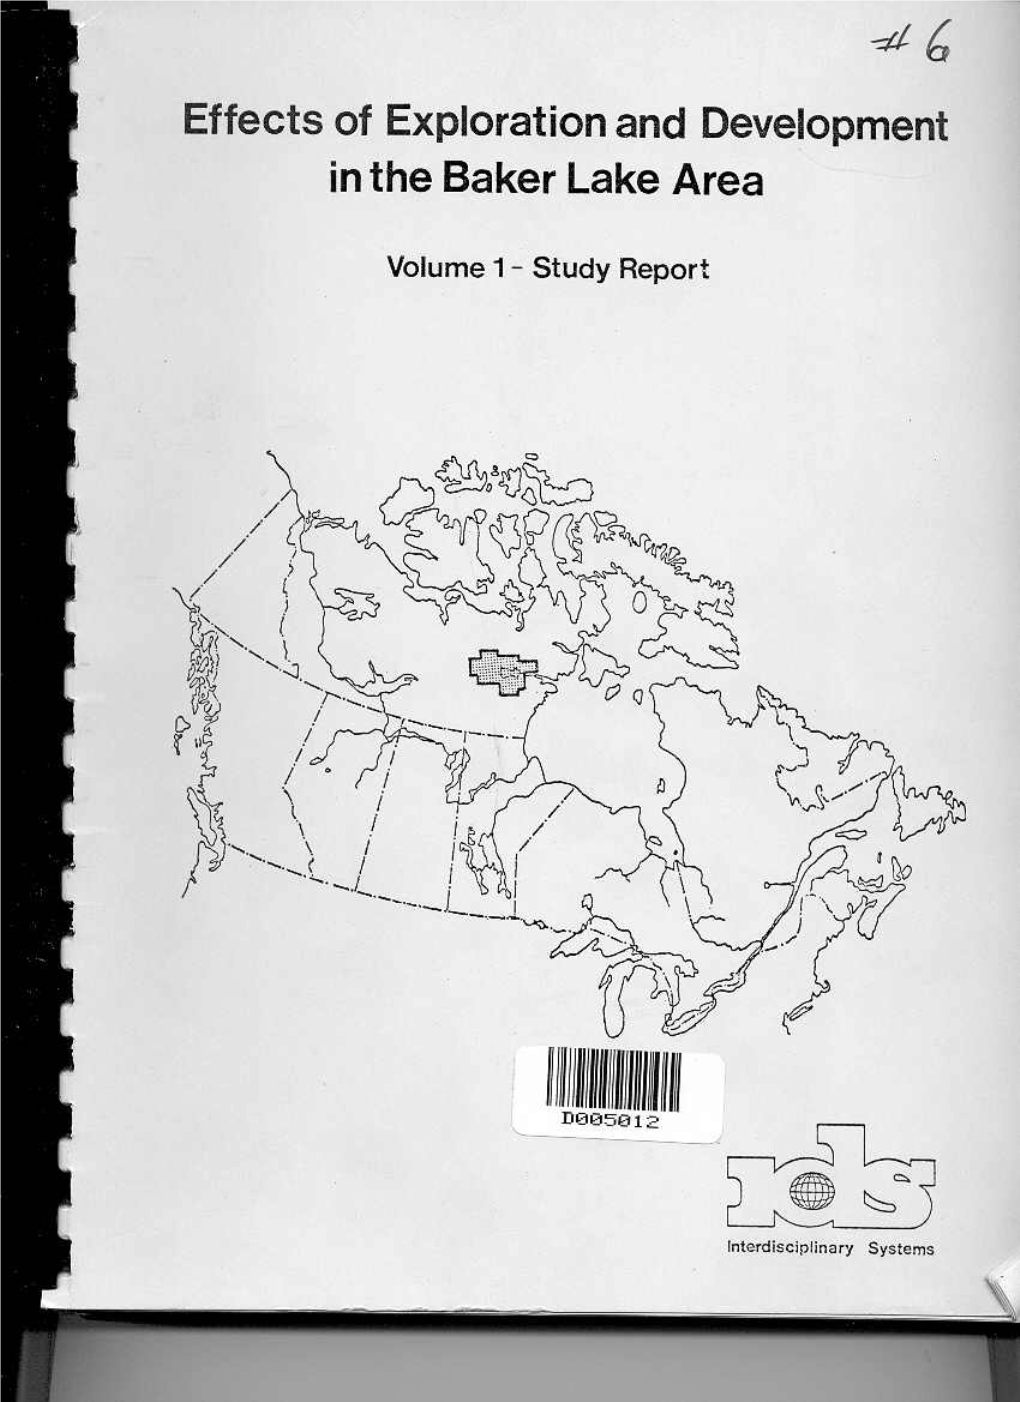 Volume 1 - Study Report